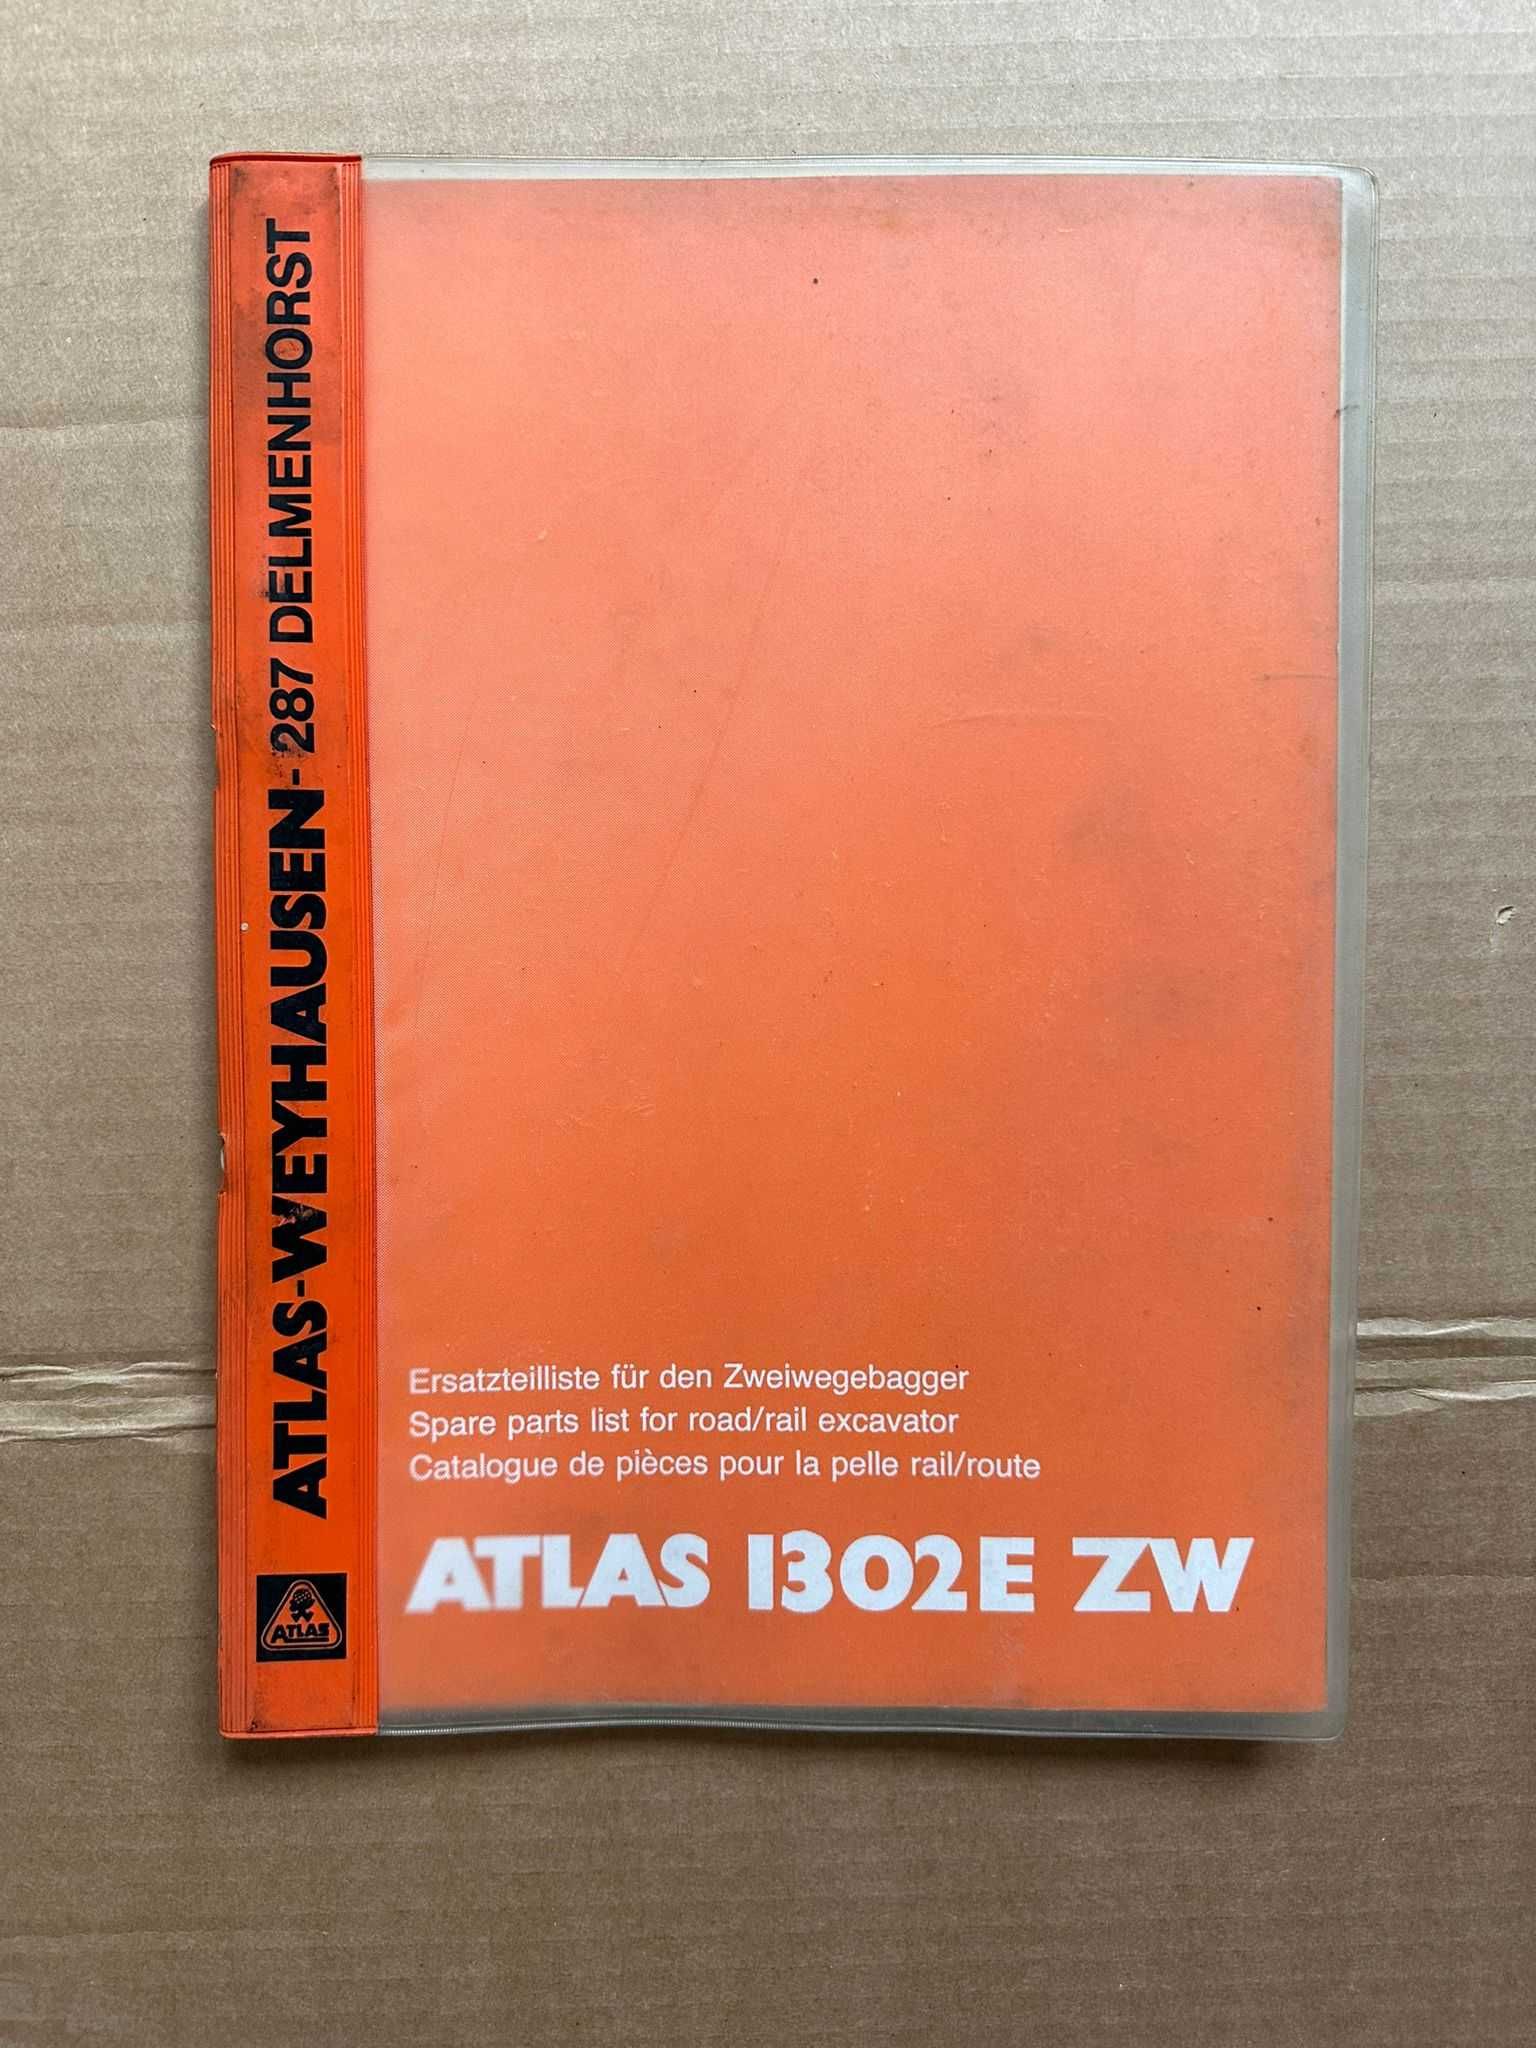 Katalog Atlas 1302E ZW